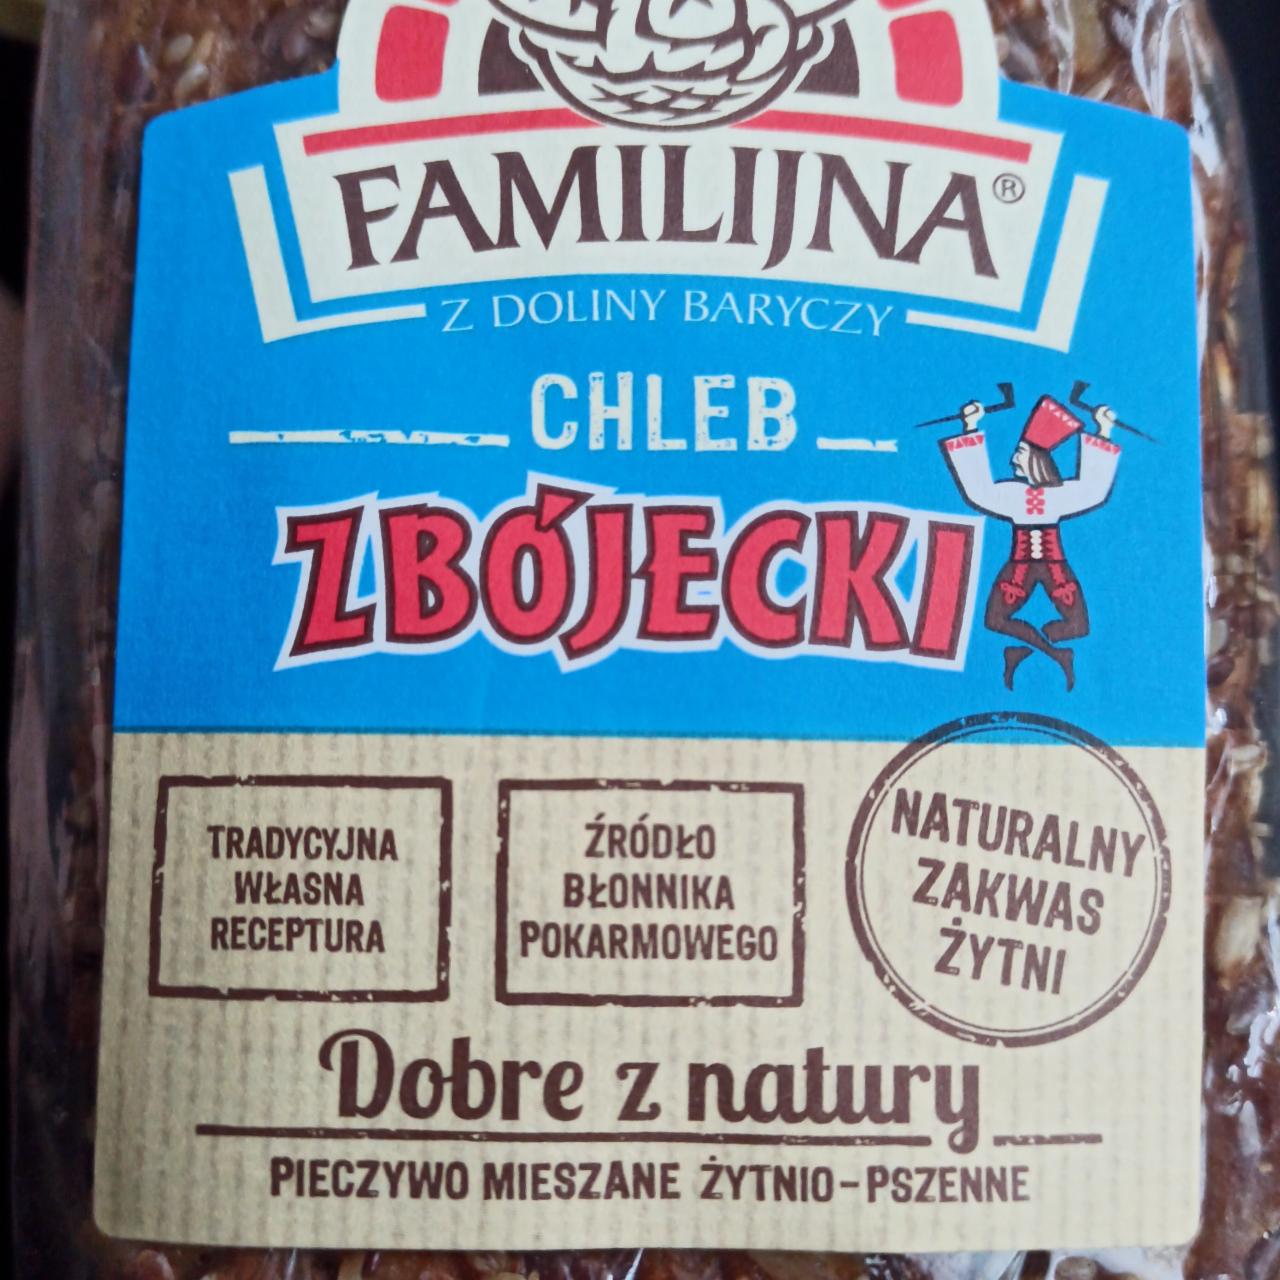 Фото - Хліб житньо-пшеничний Chléb Zbojeckie Familijna